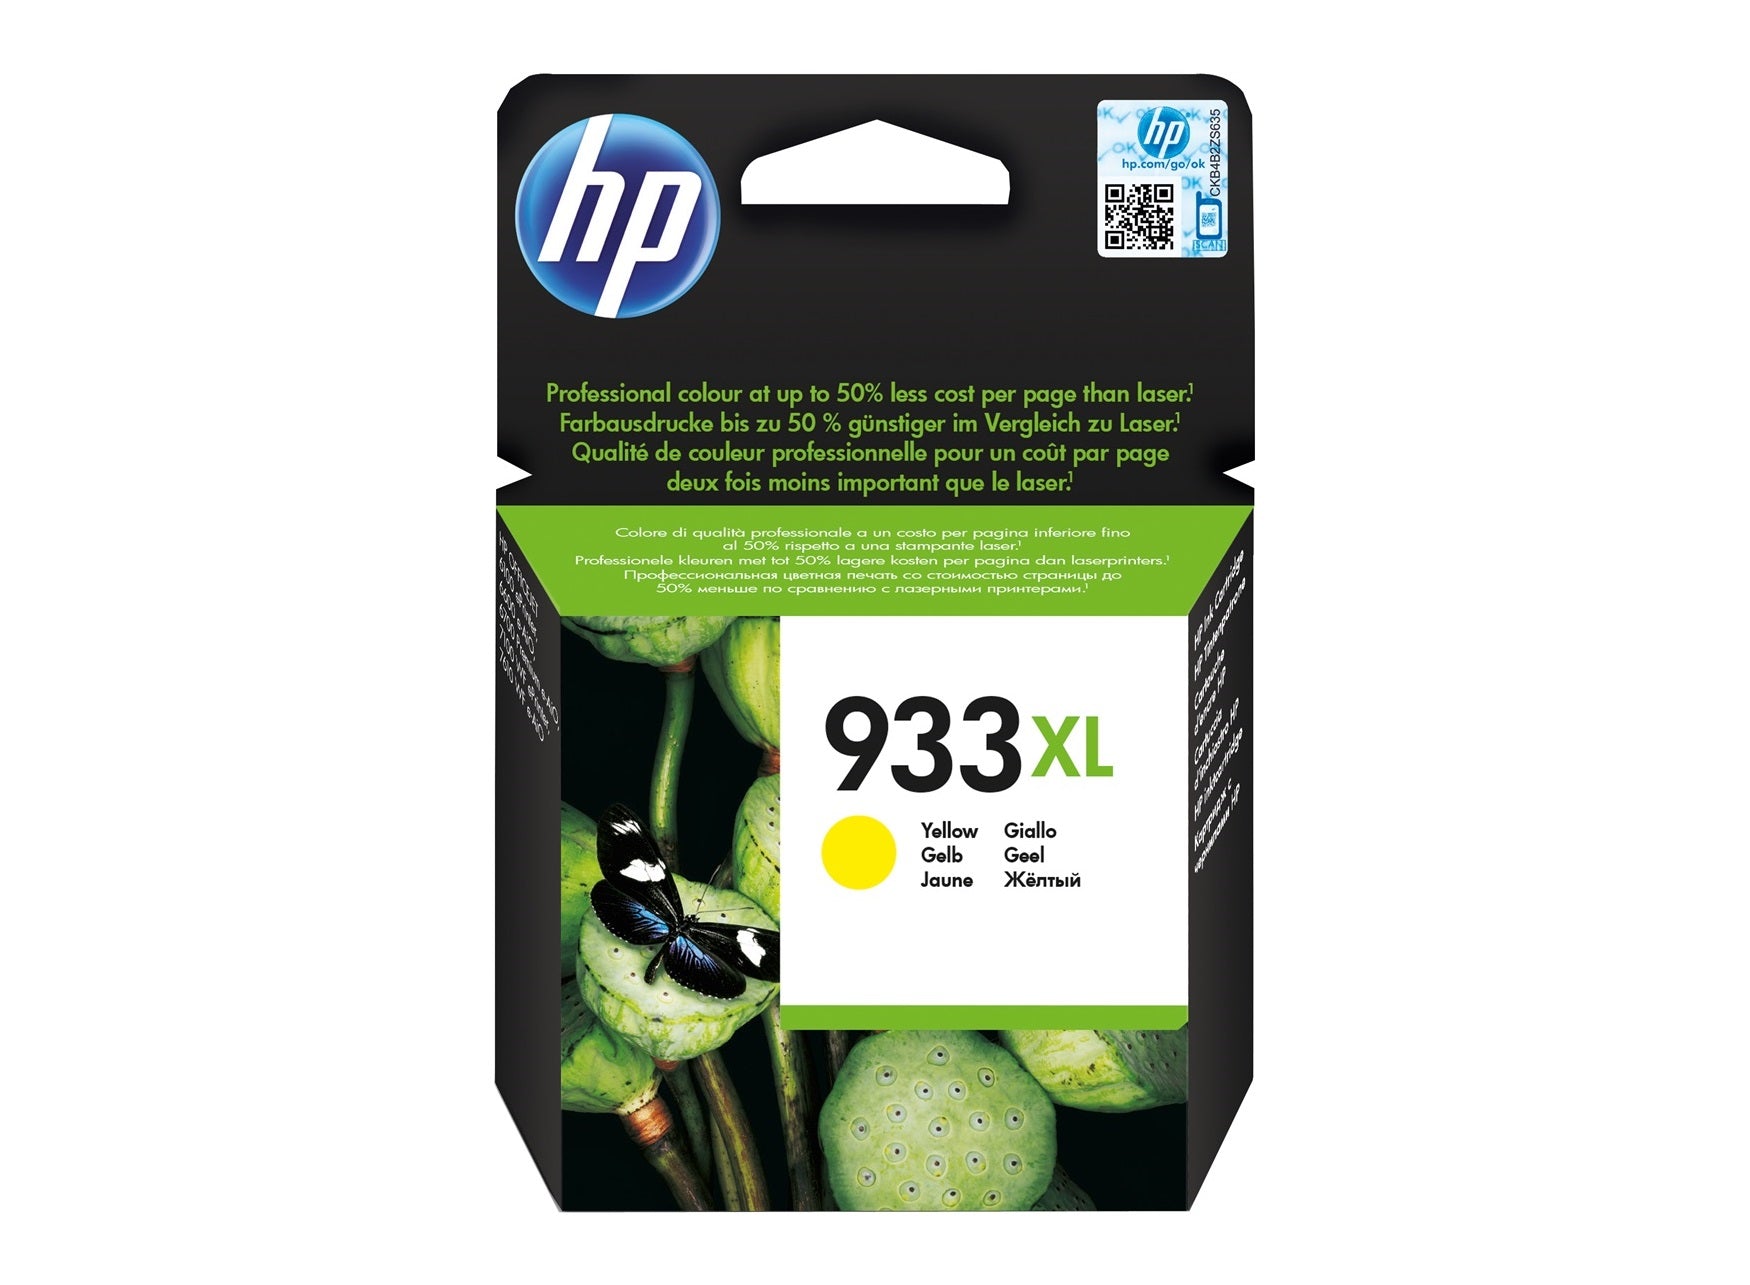 HP 932XL  Ink Cartridge for HP Officjet 7610